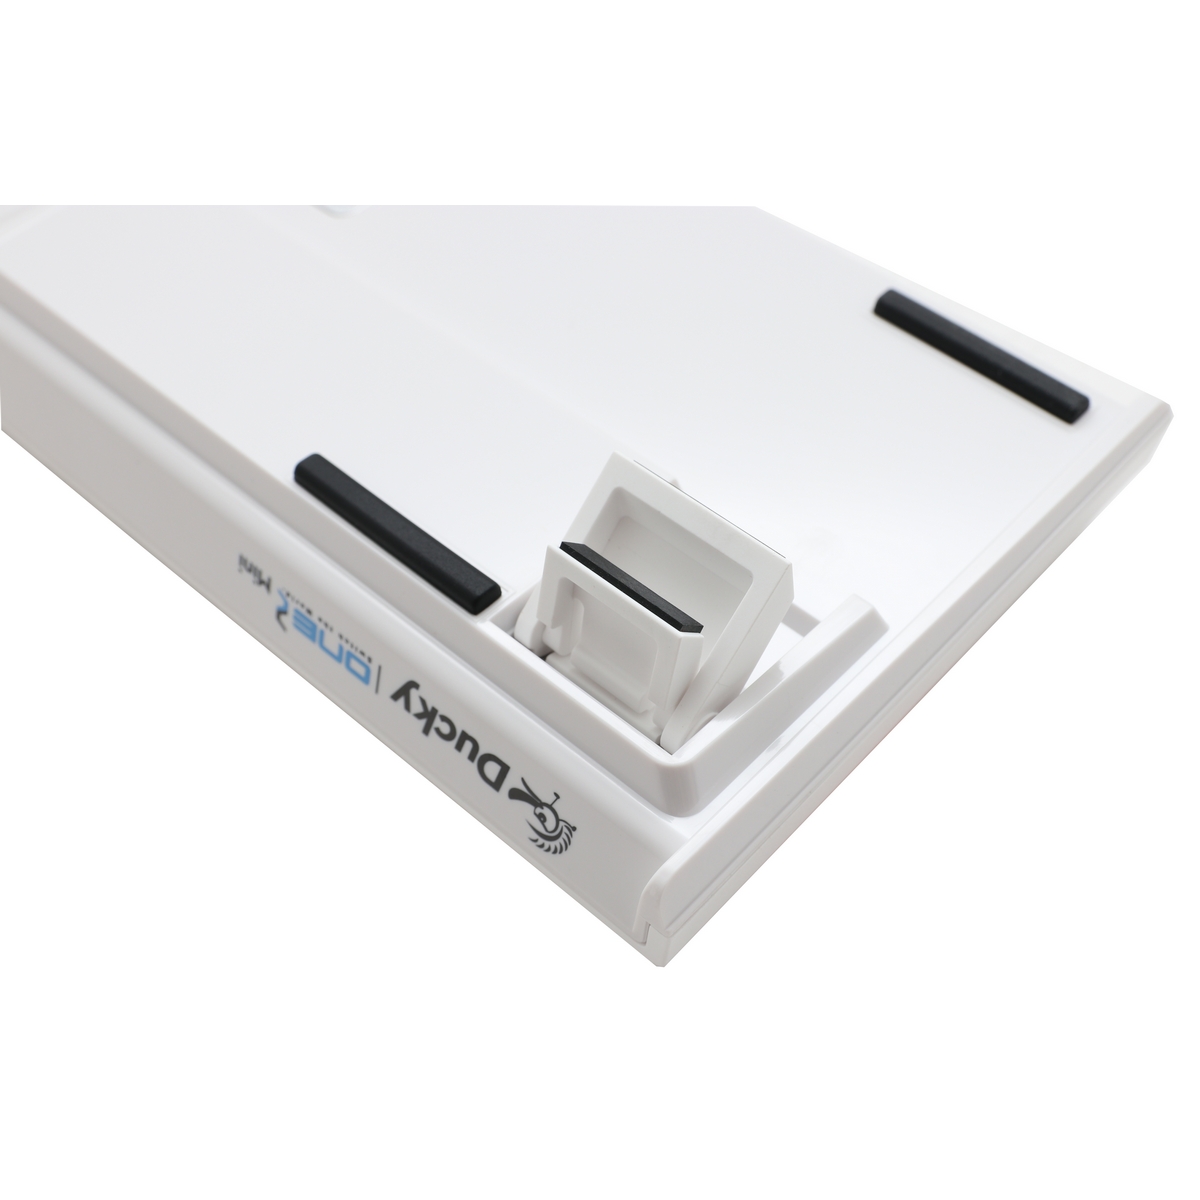 Ducky - Ducky One 2 Mini 60% White Frame RGB USB Mechanical Gaming Keyboard Black Cherry MX Switch UK Layout